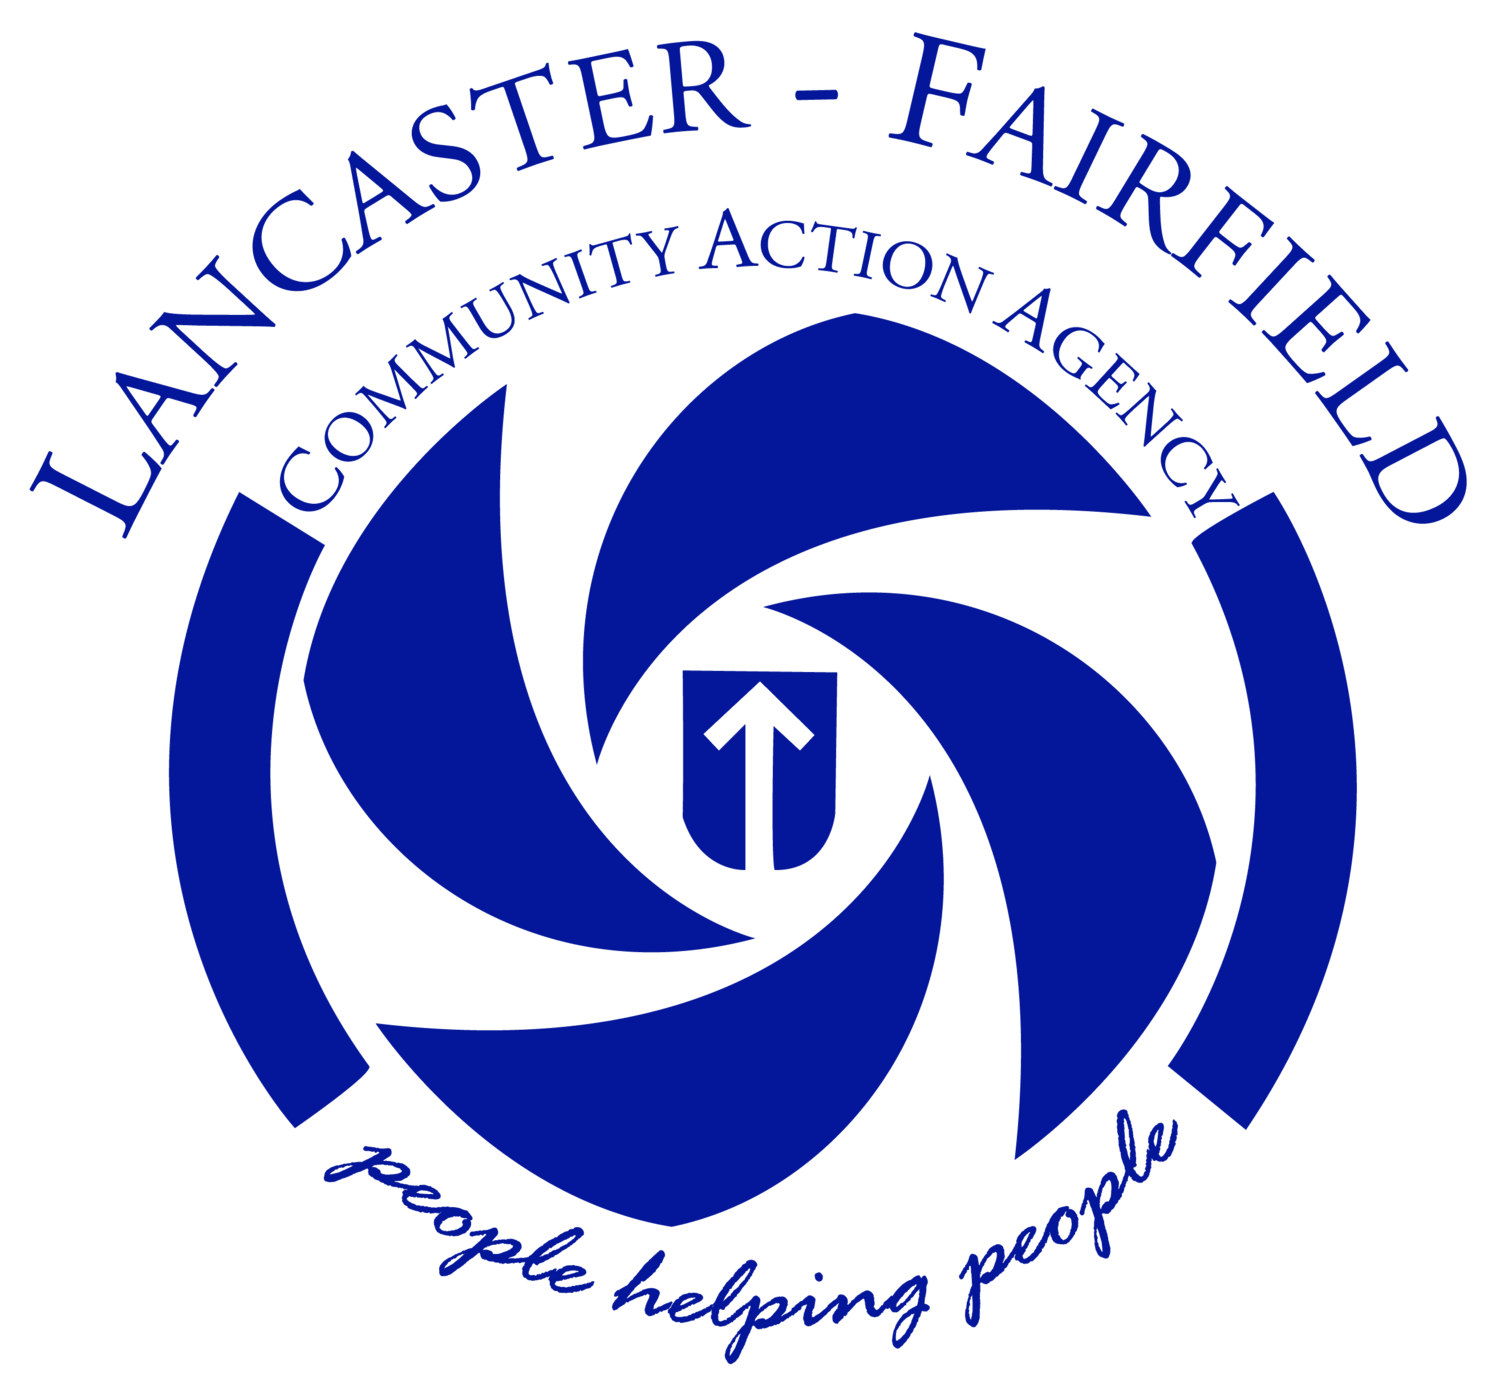 Lancaster-Fairfield Community Action Program